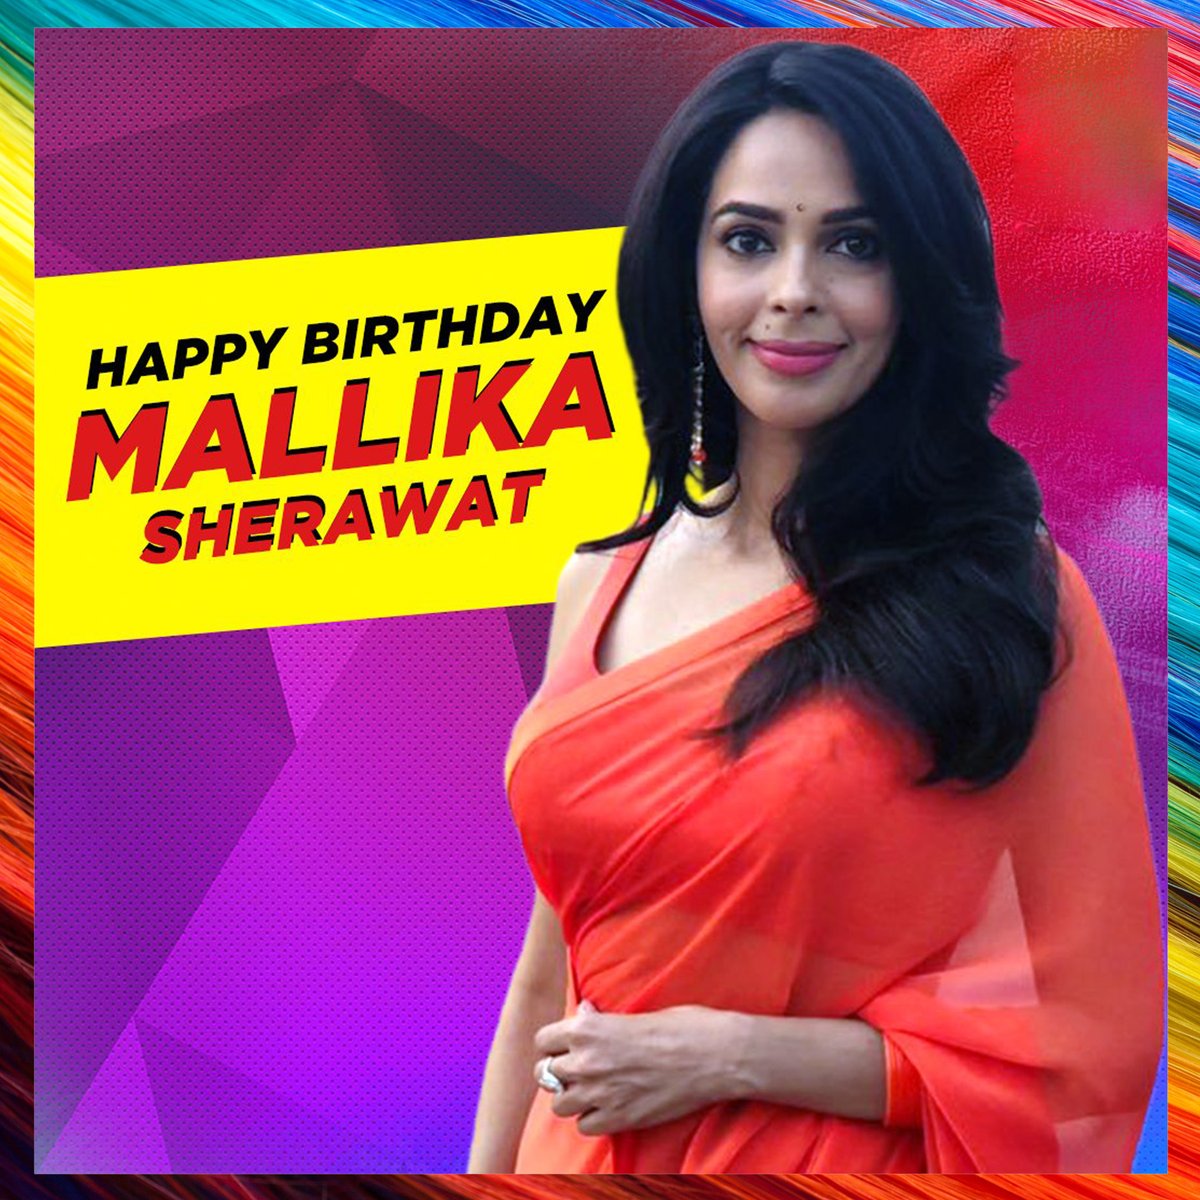 Happy Birthday Mallika Sherawat!
#HappyBirthdayMallika #MallikaSherawatBirthday #BirthdayCheersMallika #BollywoodBeauty
#CelebratingMallika #MallikaSherawatCelebration
#BirthdayWishesMallika #realmusic